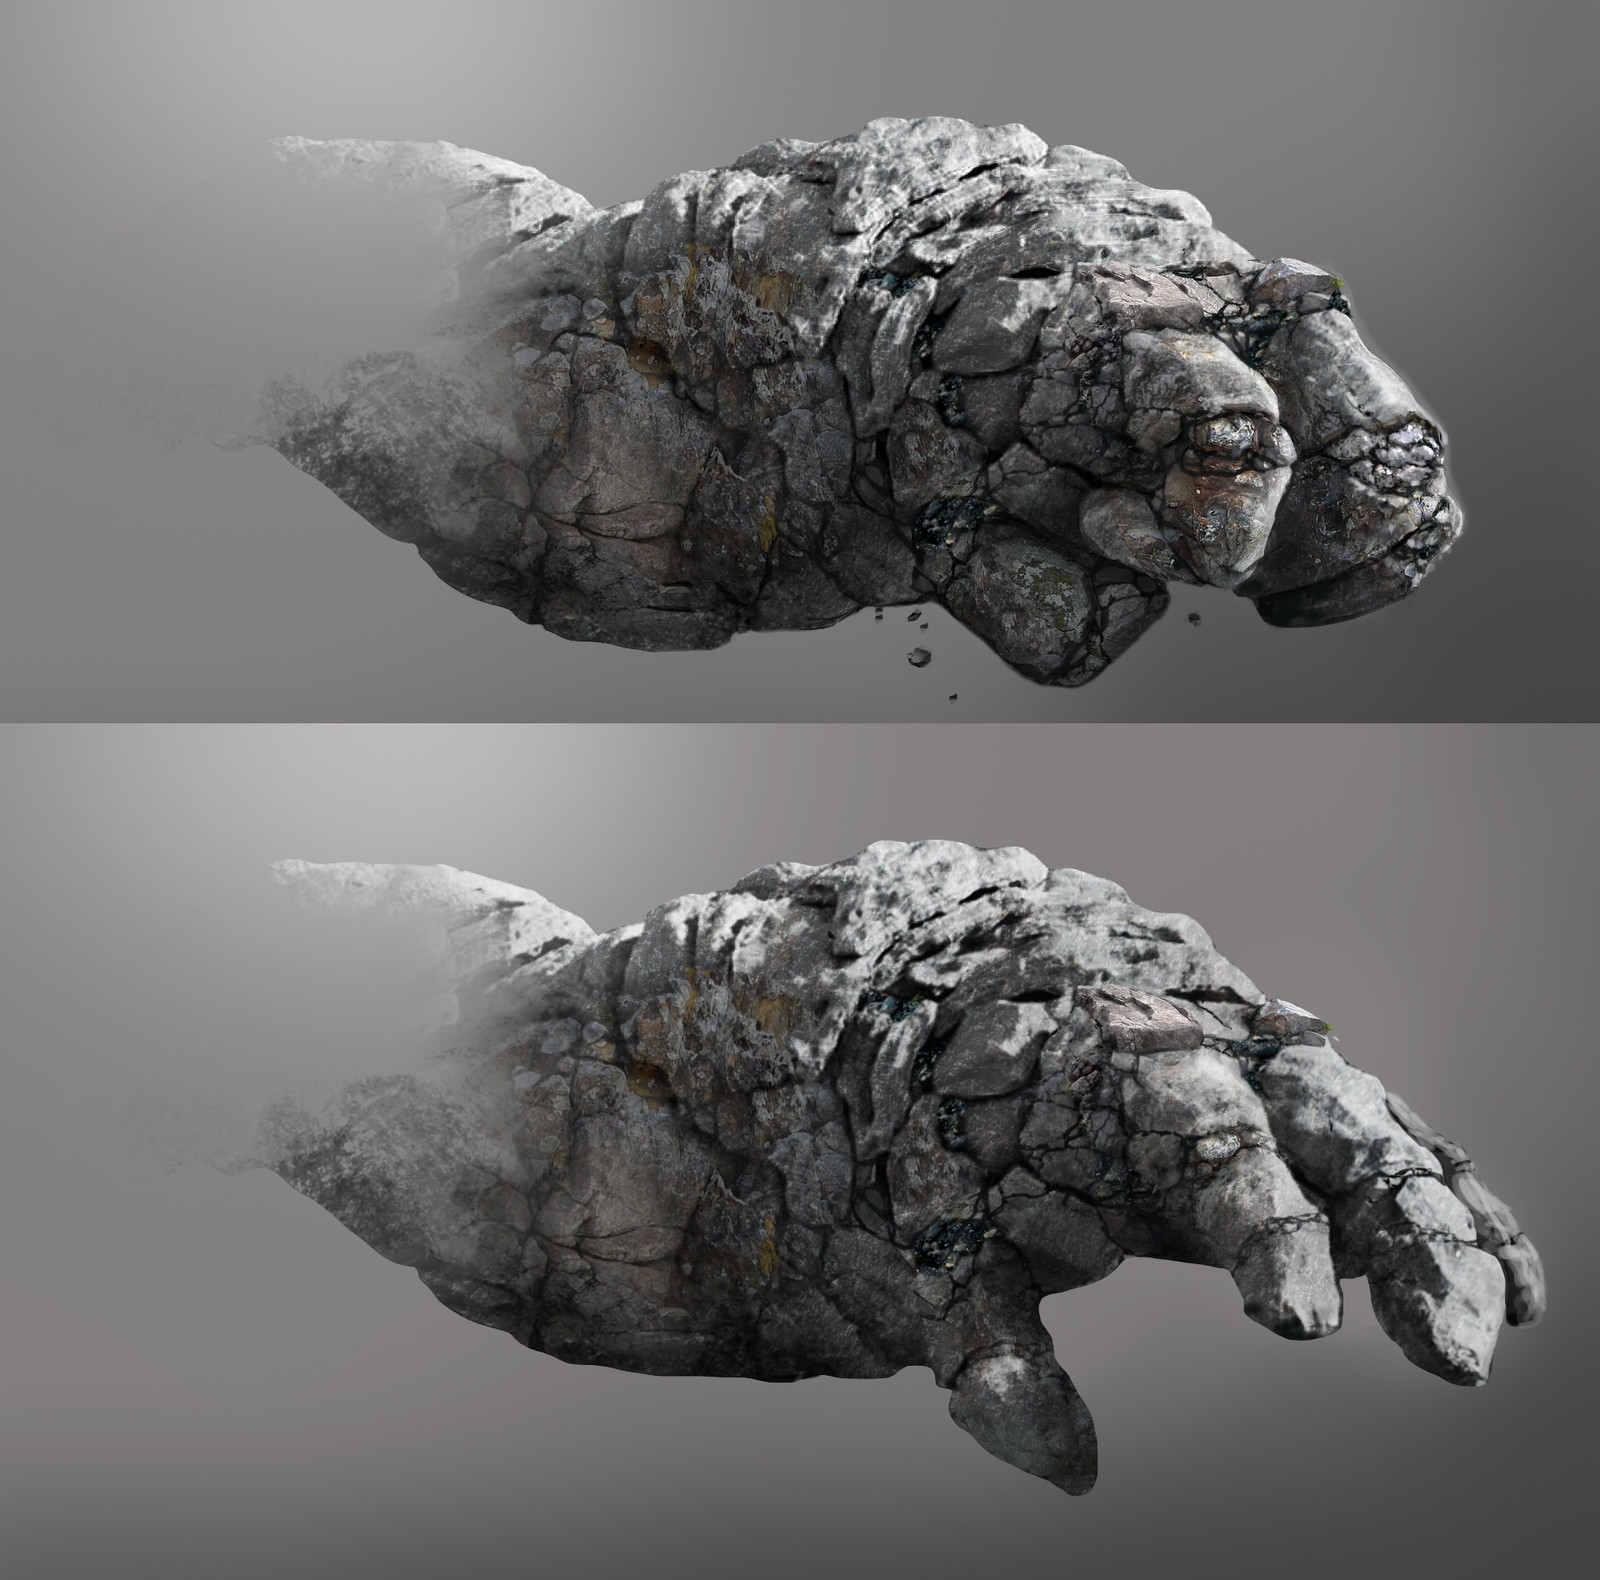 The mechanics of Korg's hands. 